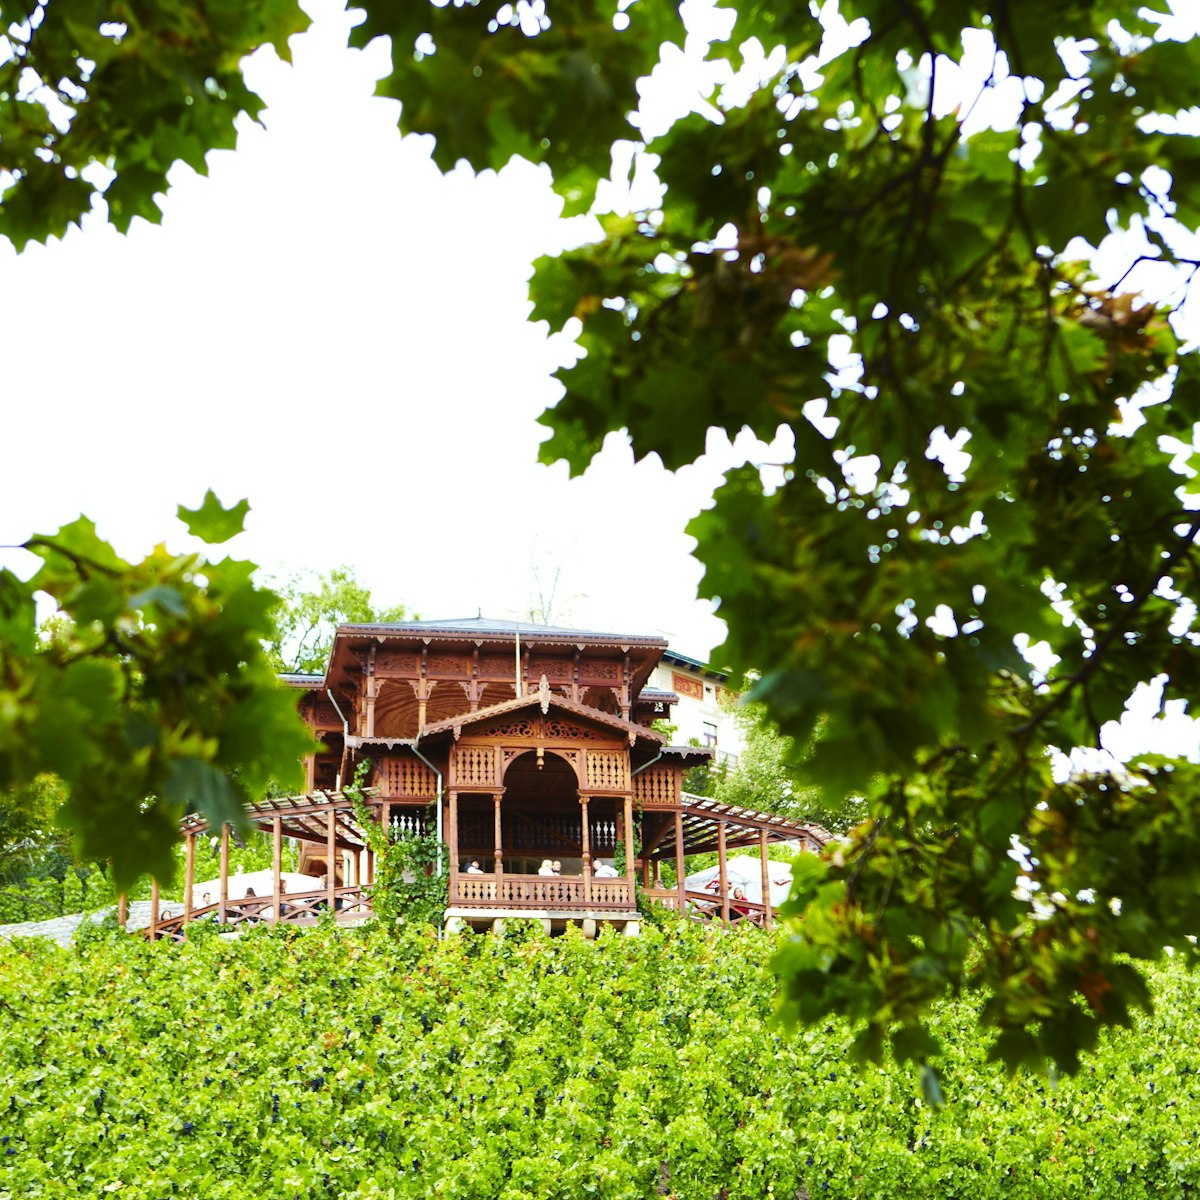 Pagoda amongst vineyard at Vinicni Altan winery.